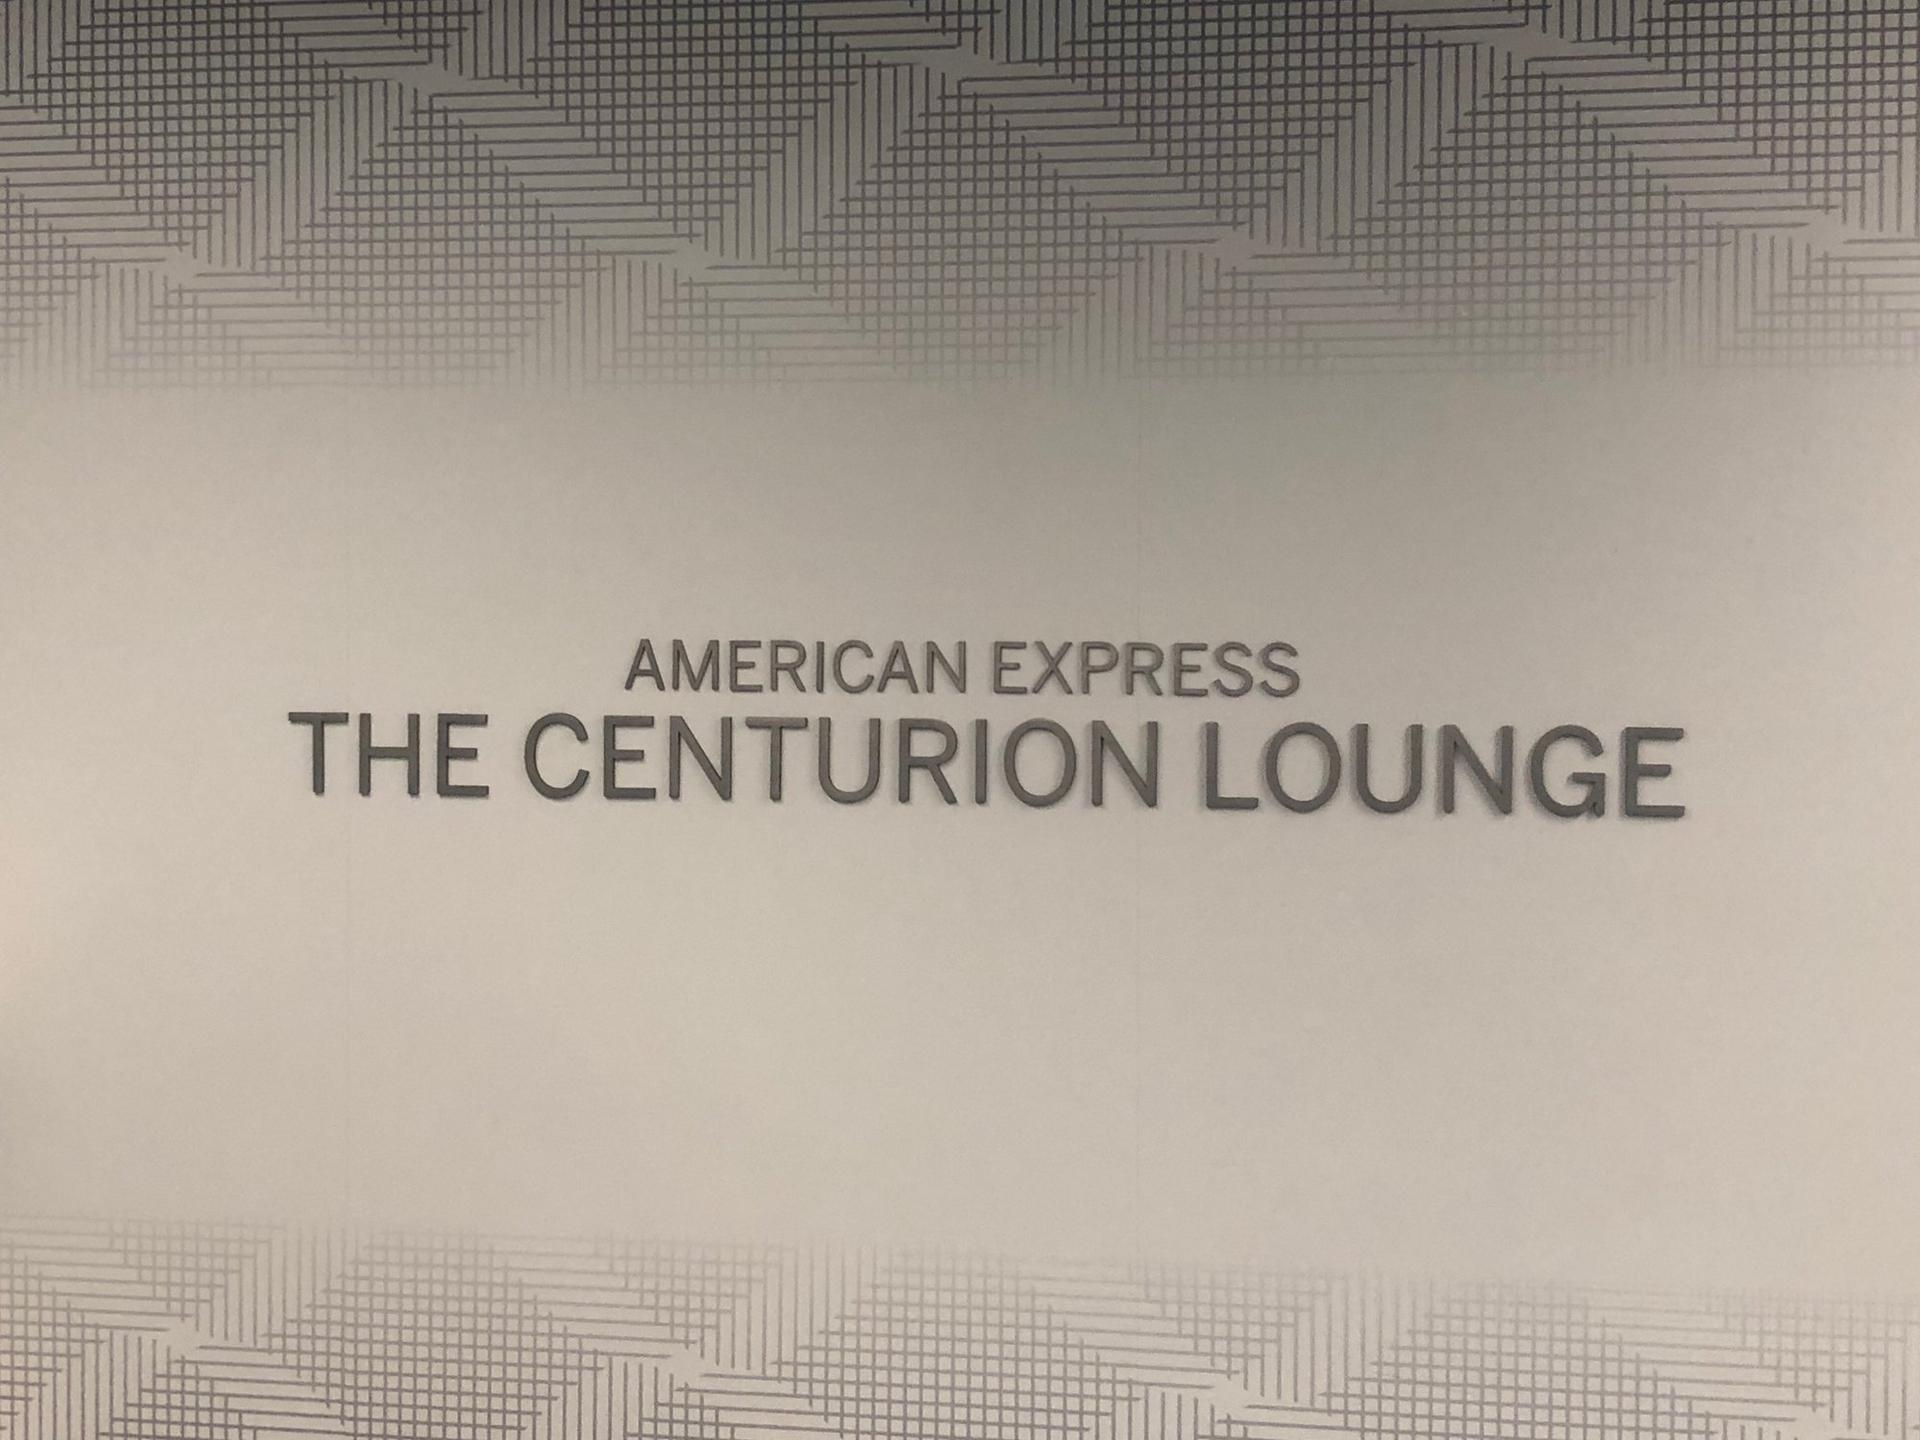 The Centurion Lounge image 71 of 76